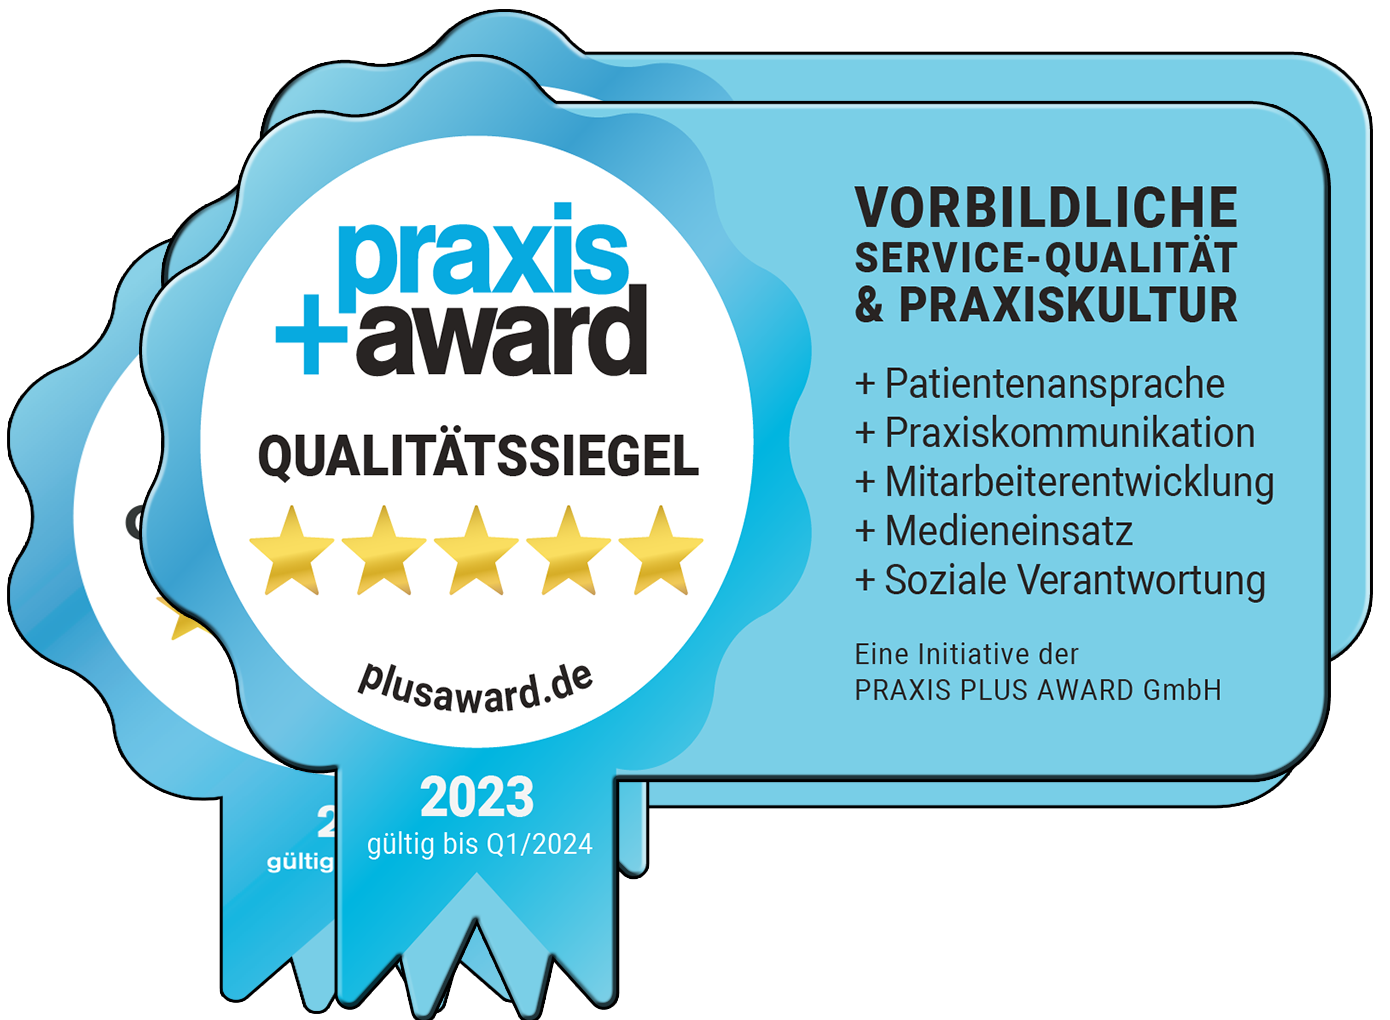 Praxis+Award Qualitätssiegel